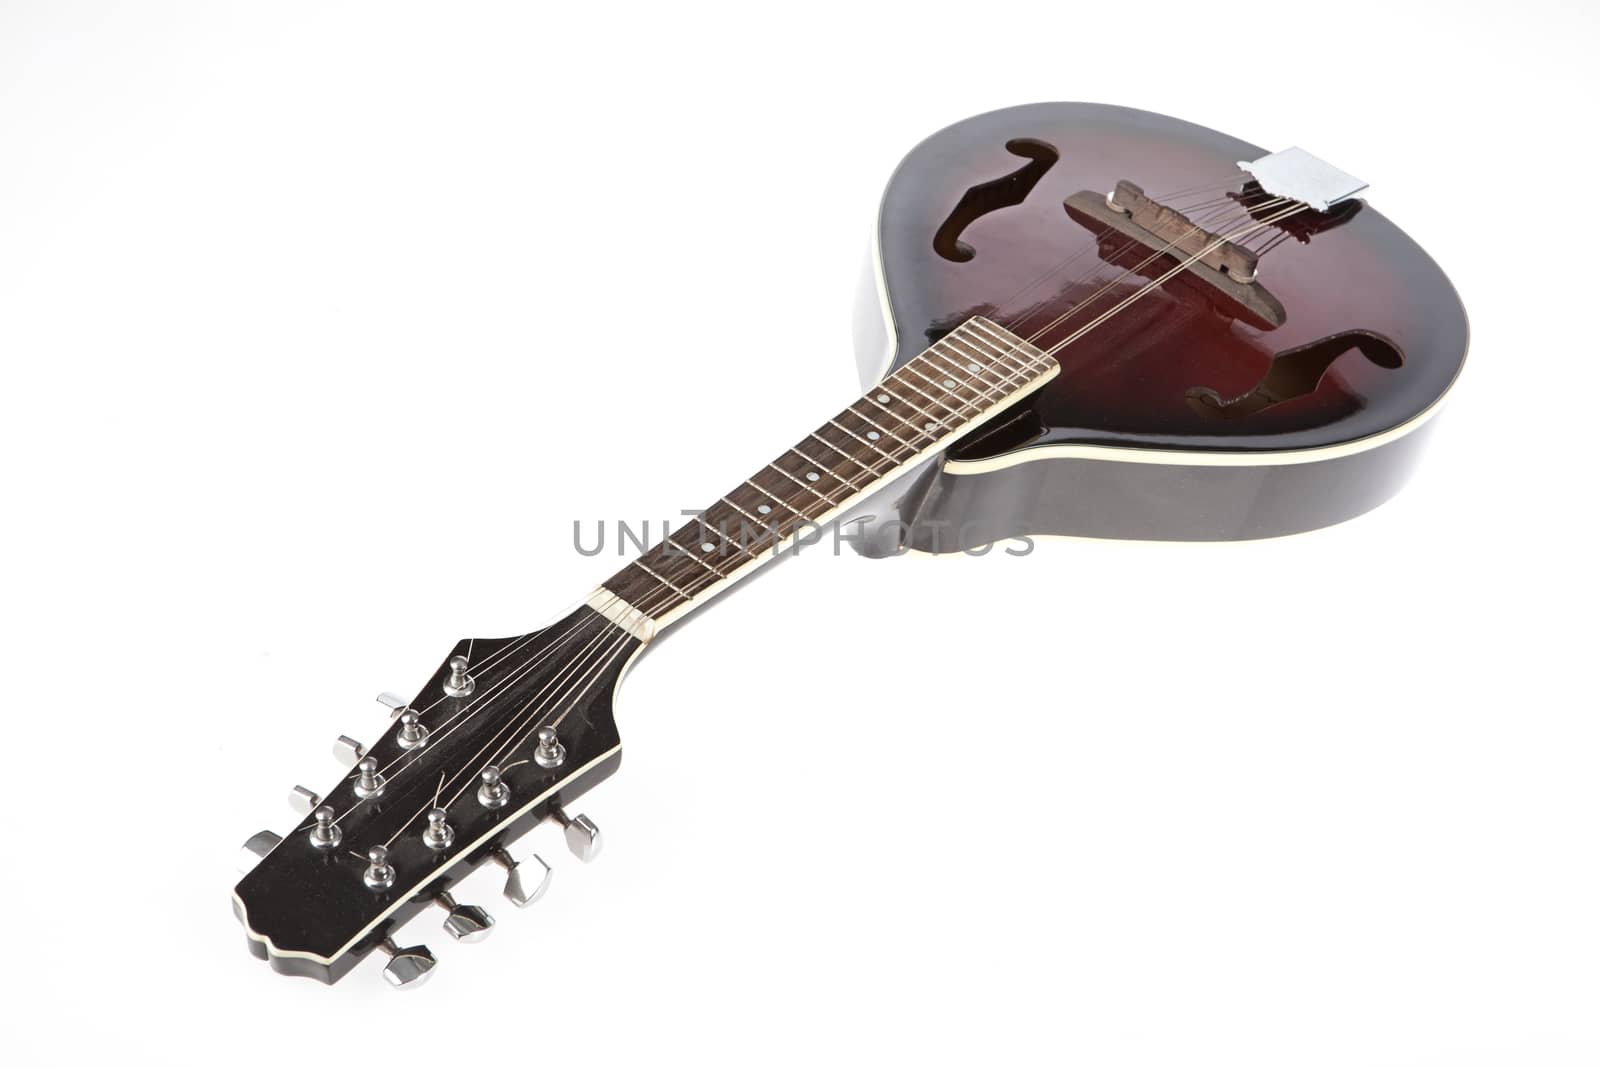 Old mandoline on an isolated studio background